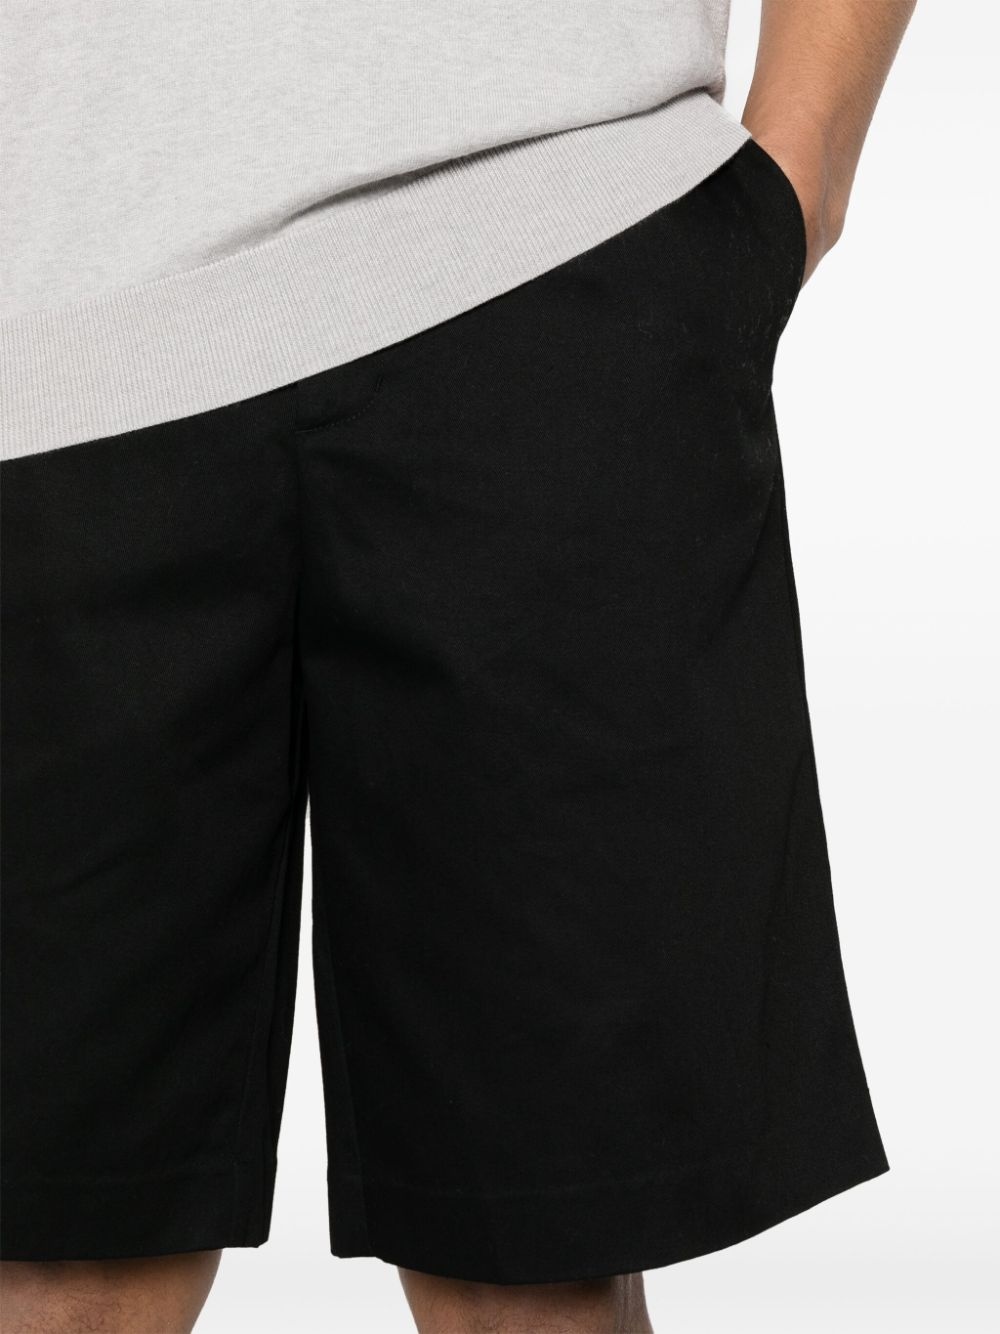 Axis cotton shorts - 5